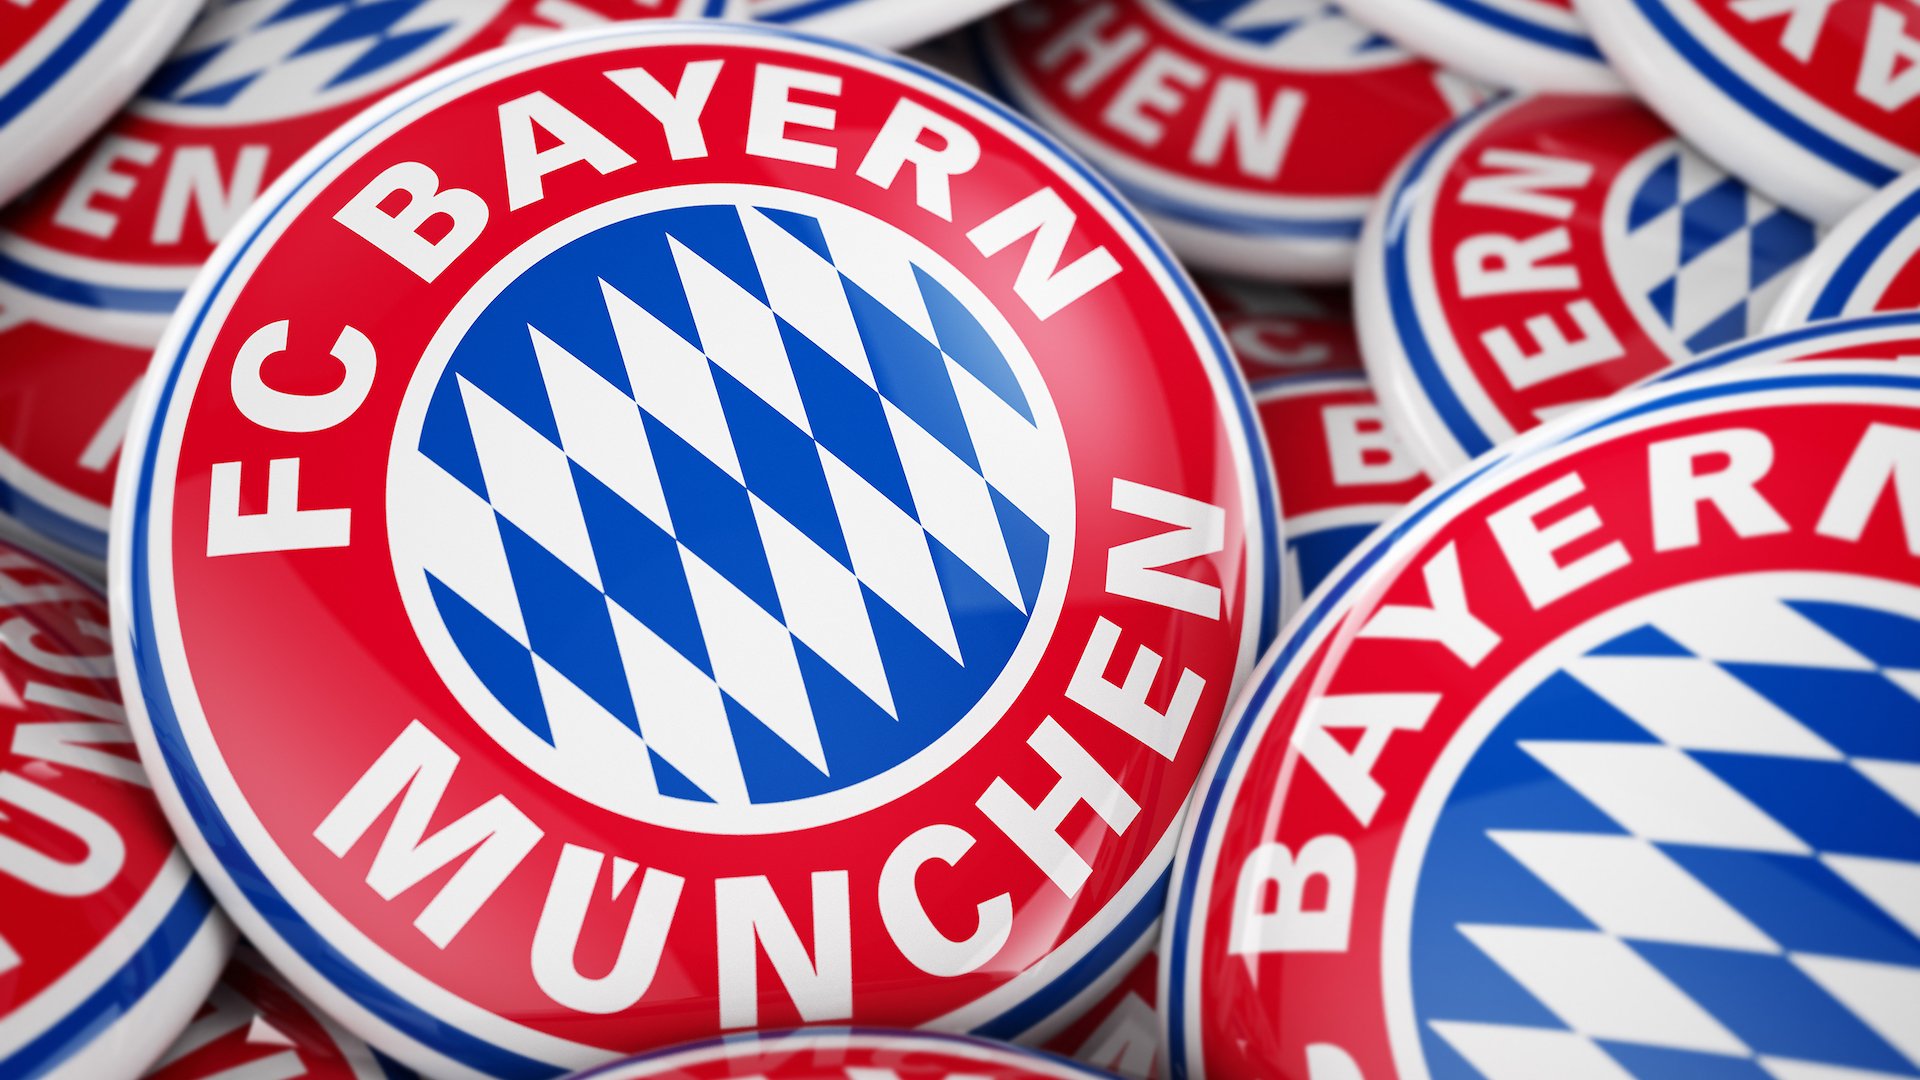 Bayern Munich badges